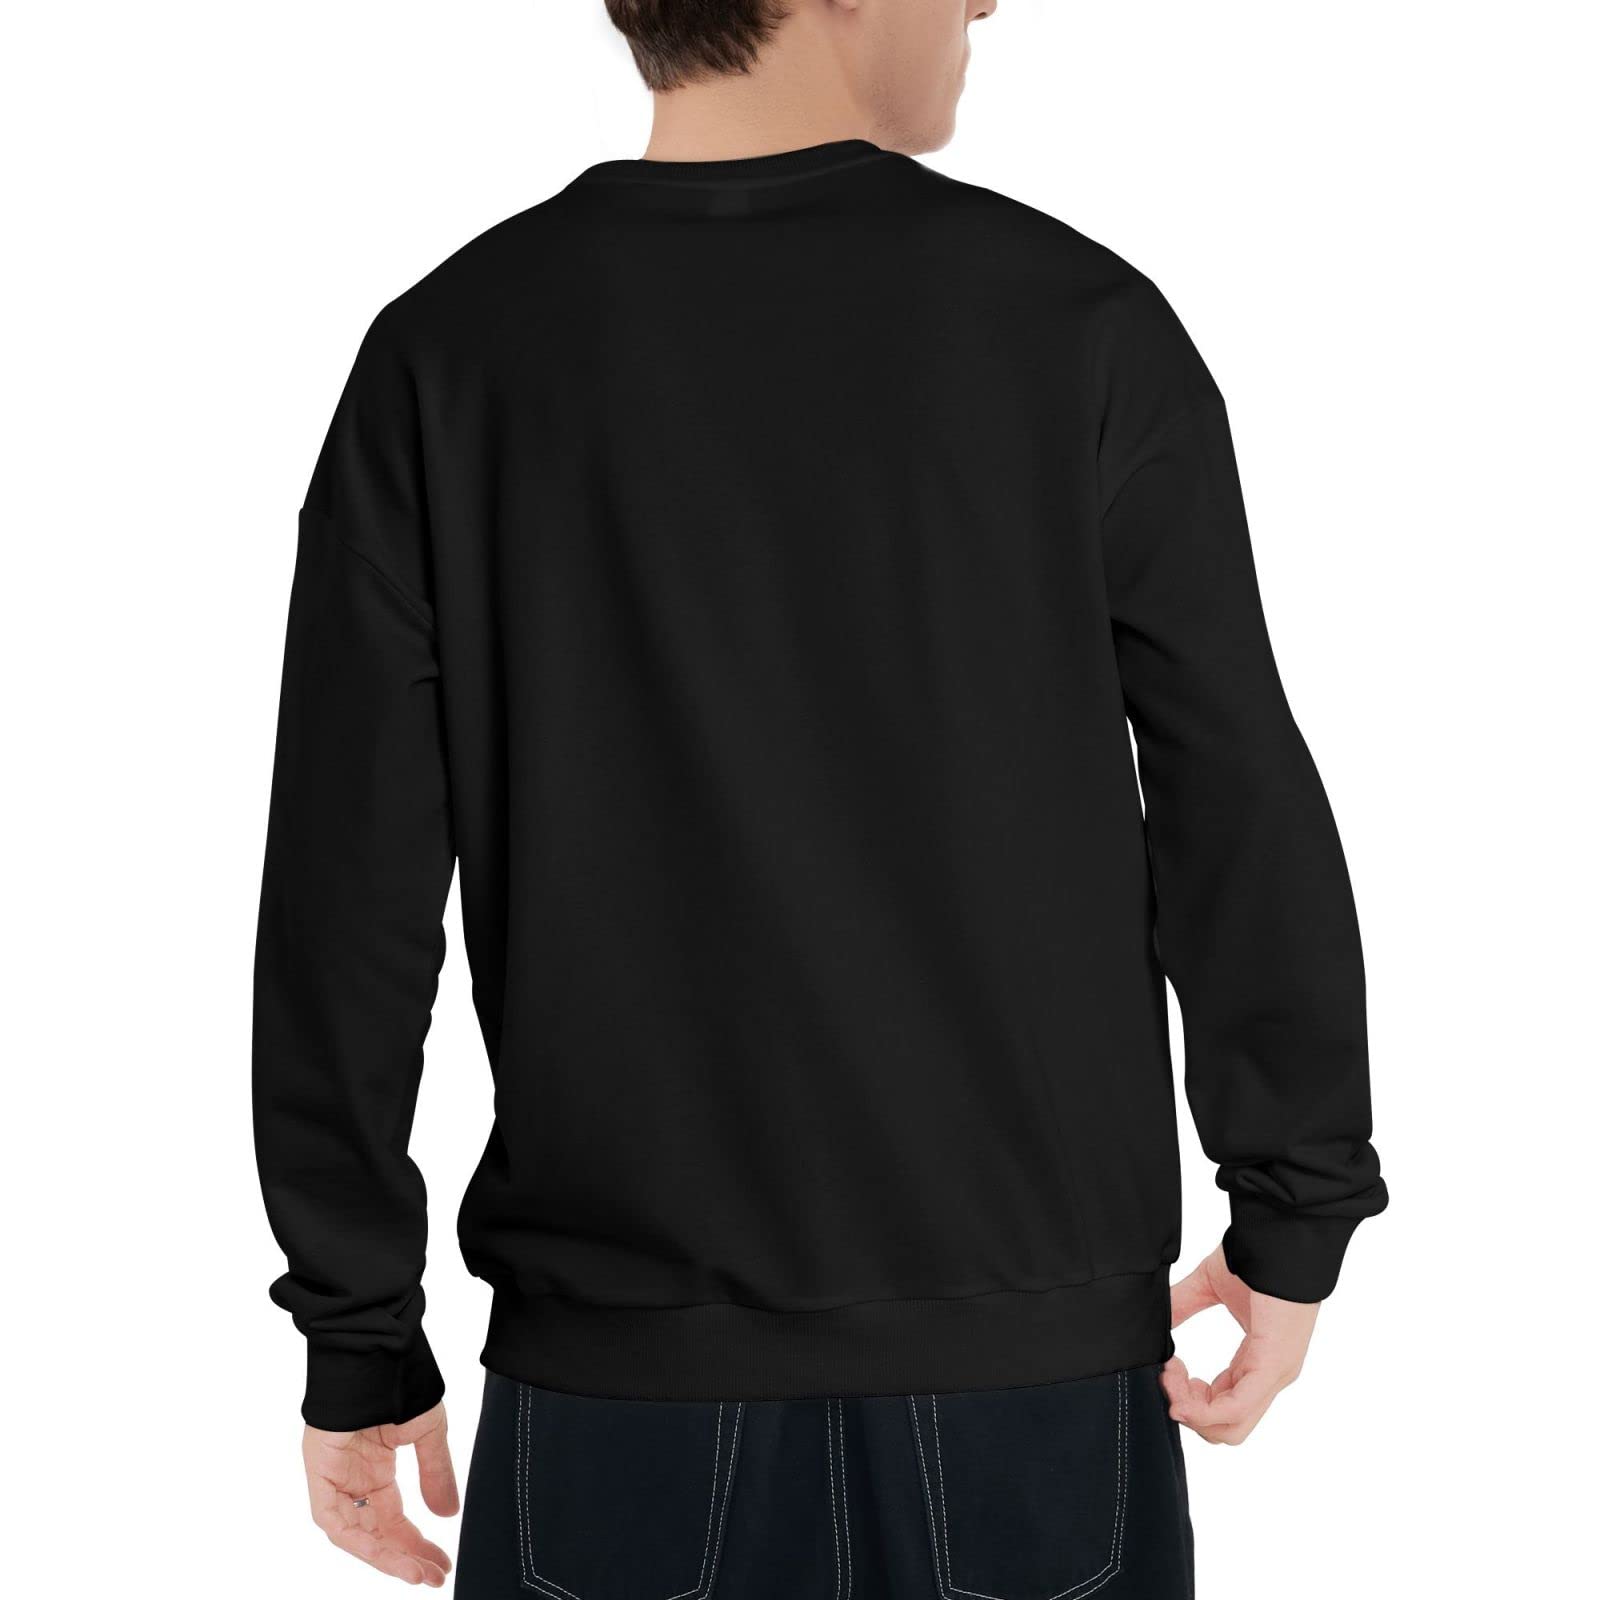 ASFRSH Chase Elliott 9 Crewneck Sweatshirt Hoodie Pullover Long Sleeve Loose Lightweight Sport Unisex Cotton Sweatshirt Black